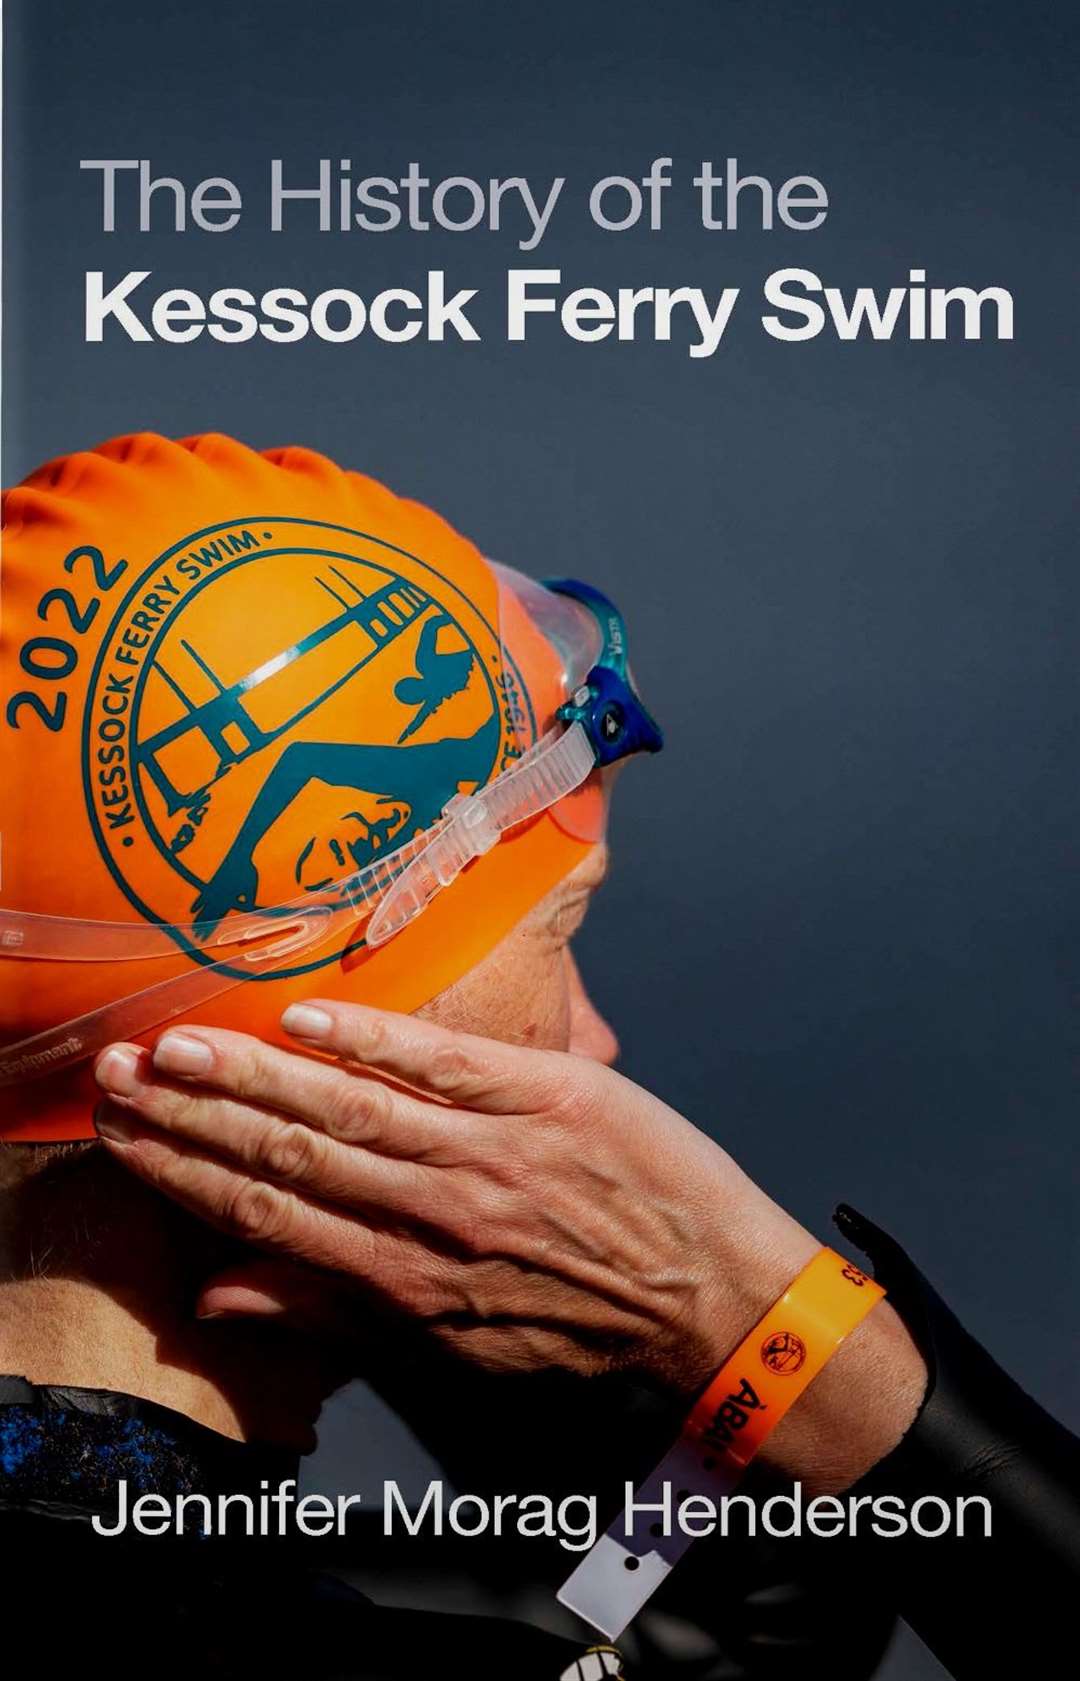 The History Of A Kessock Ferry Swim by Jennifer Morag Henderson.